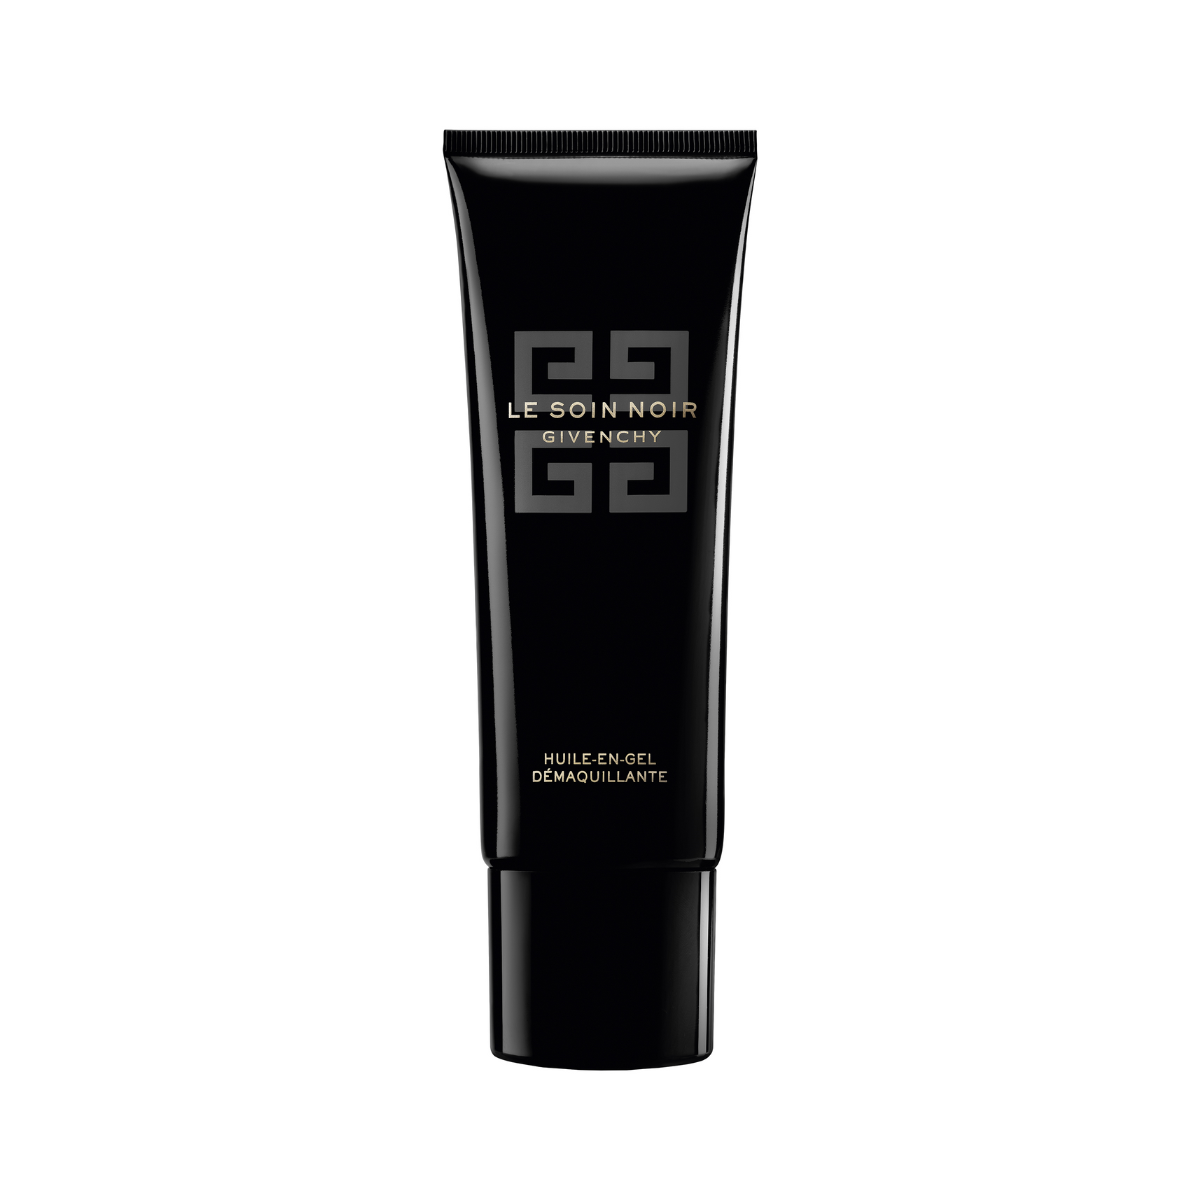 Givenchy Le Soin Noir Make-Up Remover